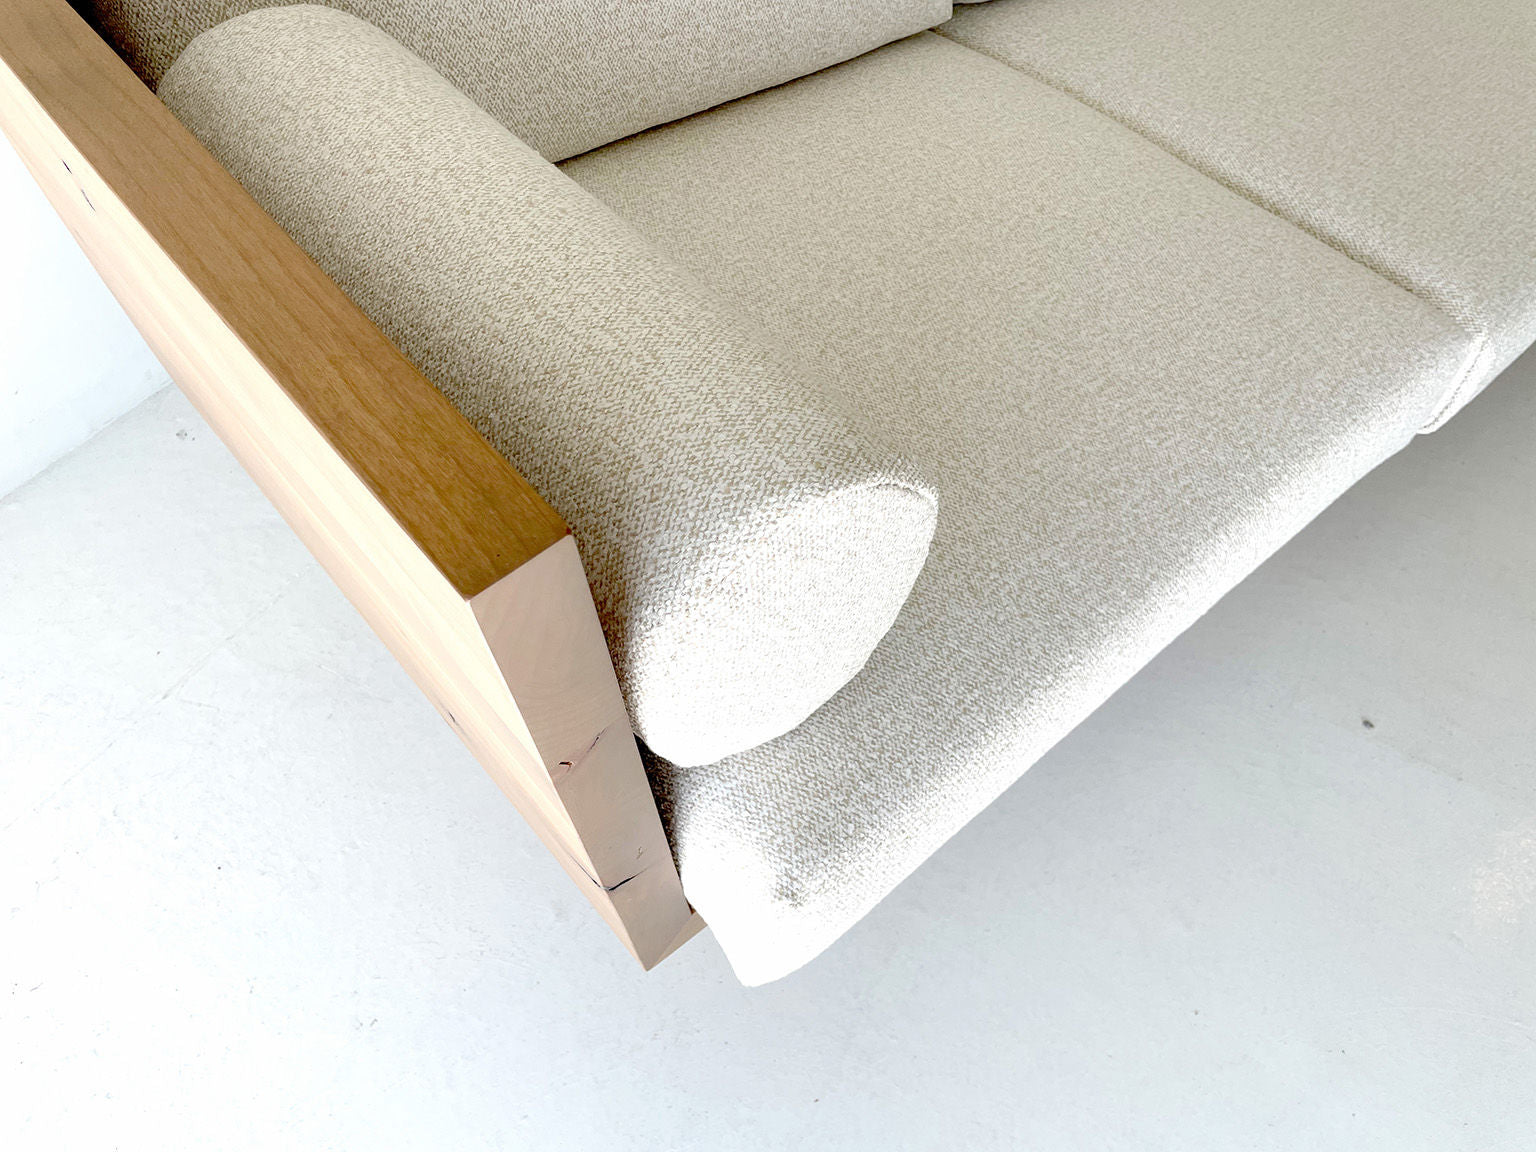 Suelo Modern Wood Sofa with Plinth Base - 2521